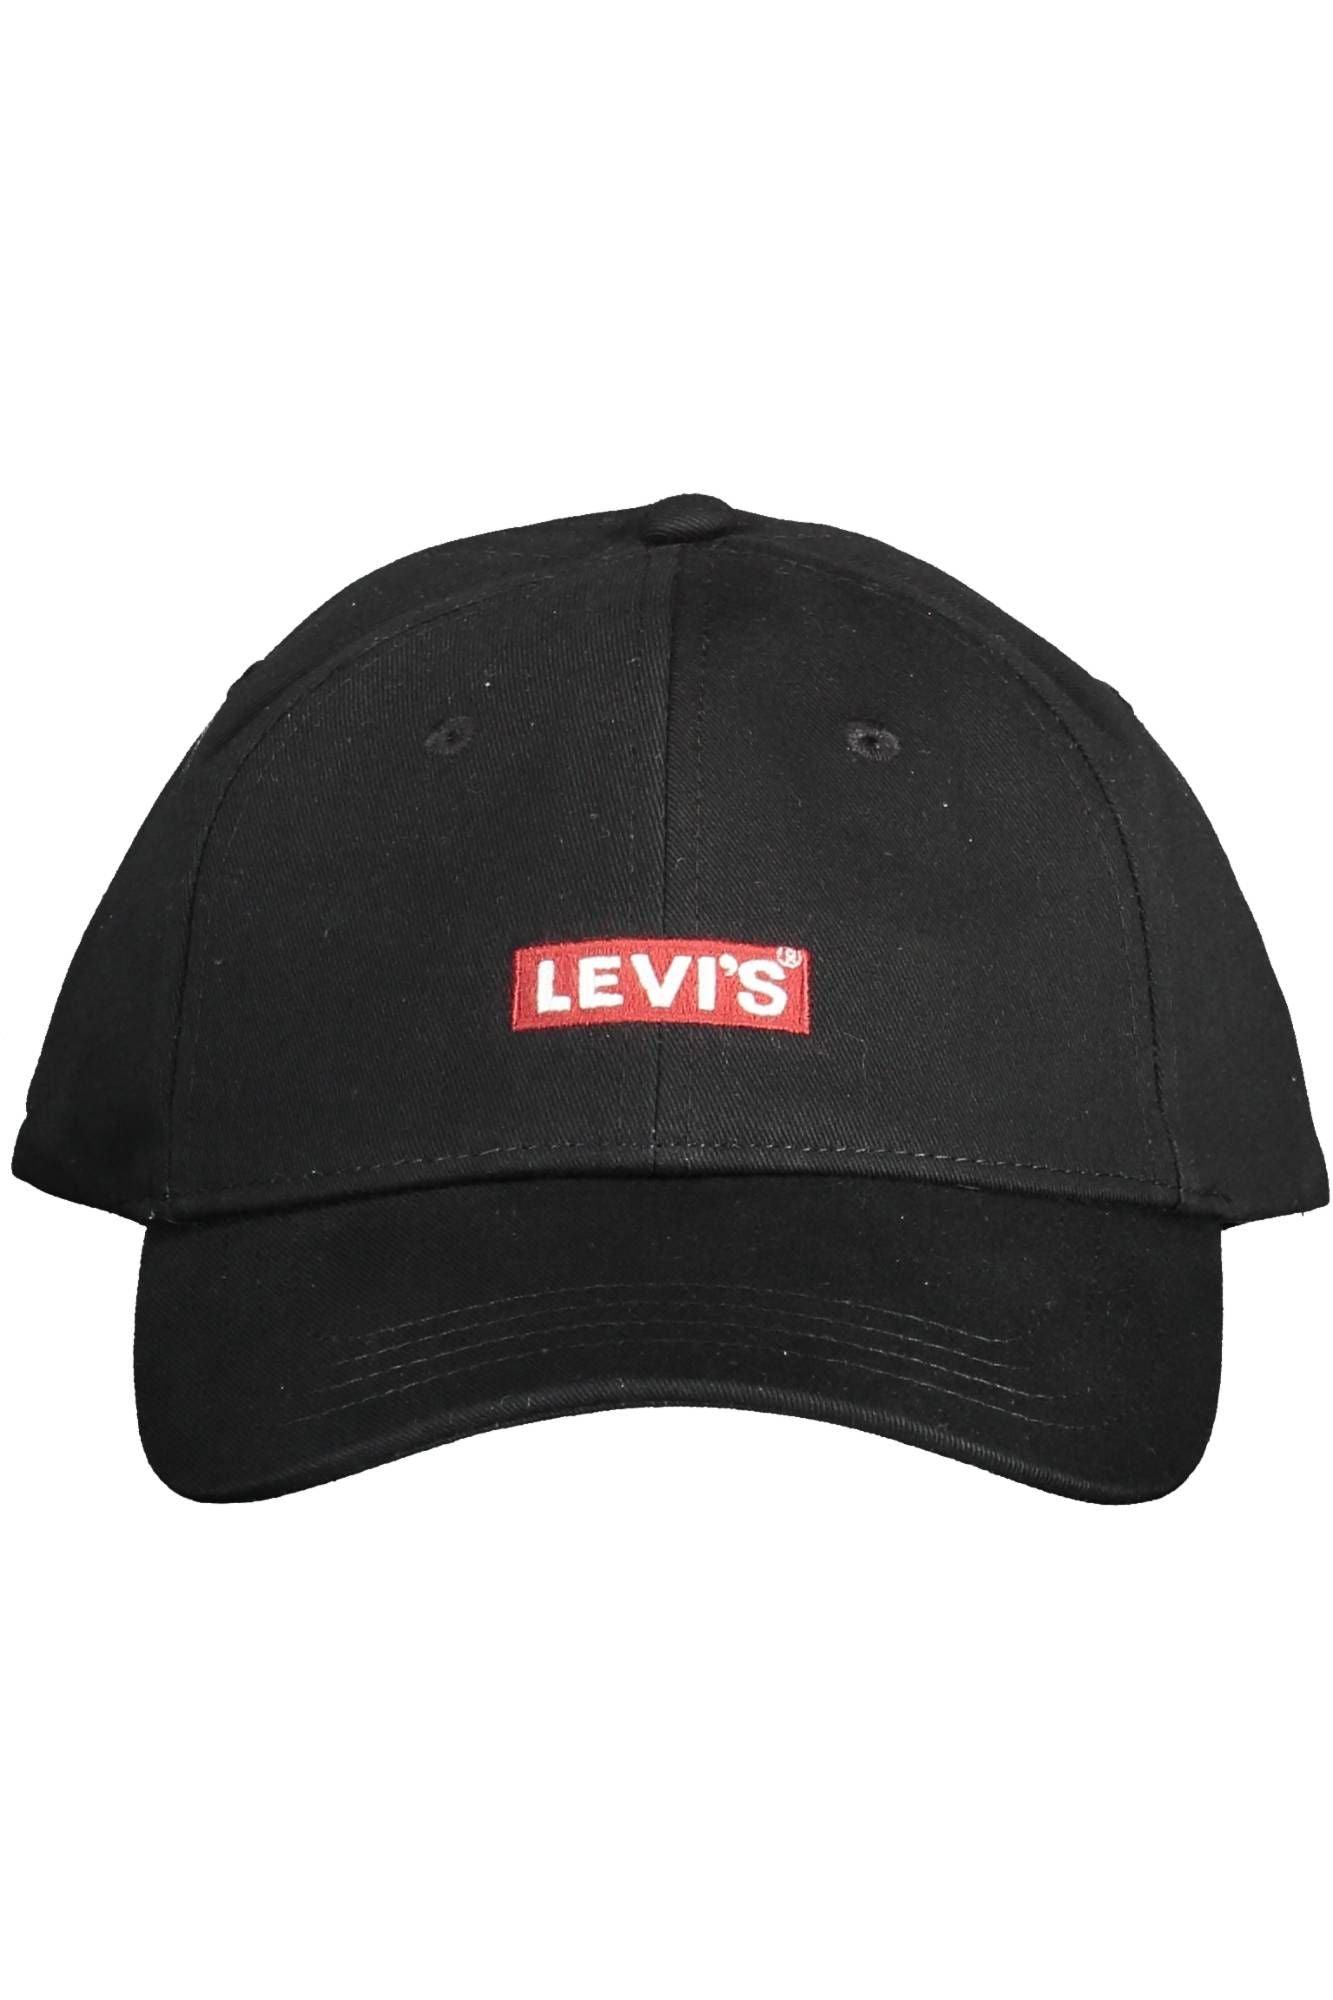 Levi's Chic Embroidered Visor Cap in Elegant Black - PER.FASHION